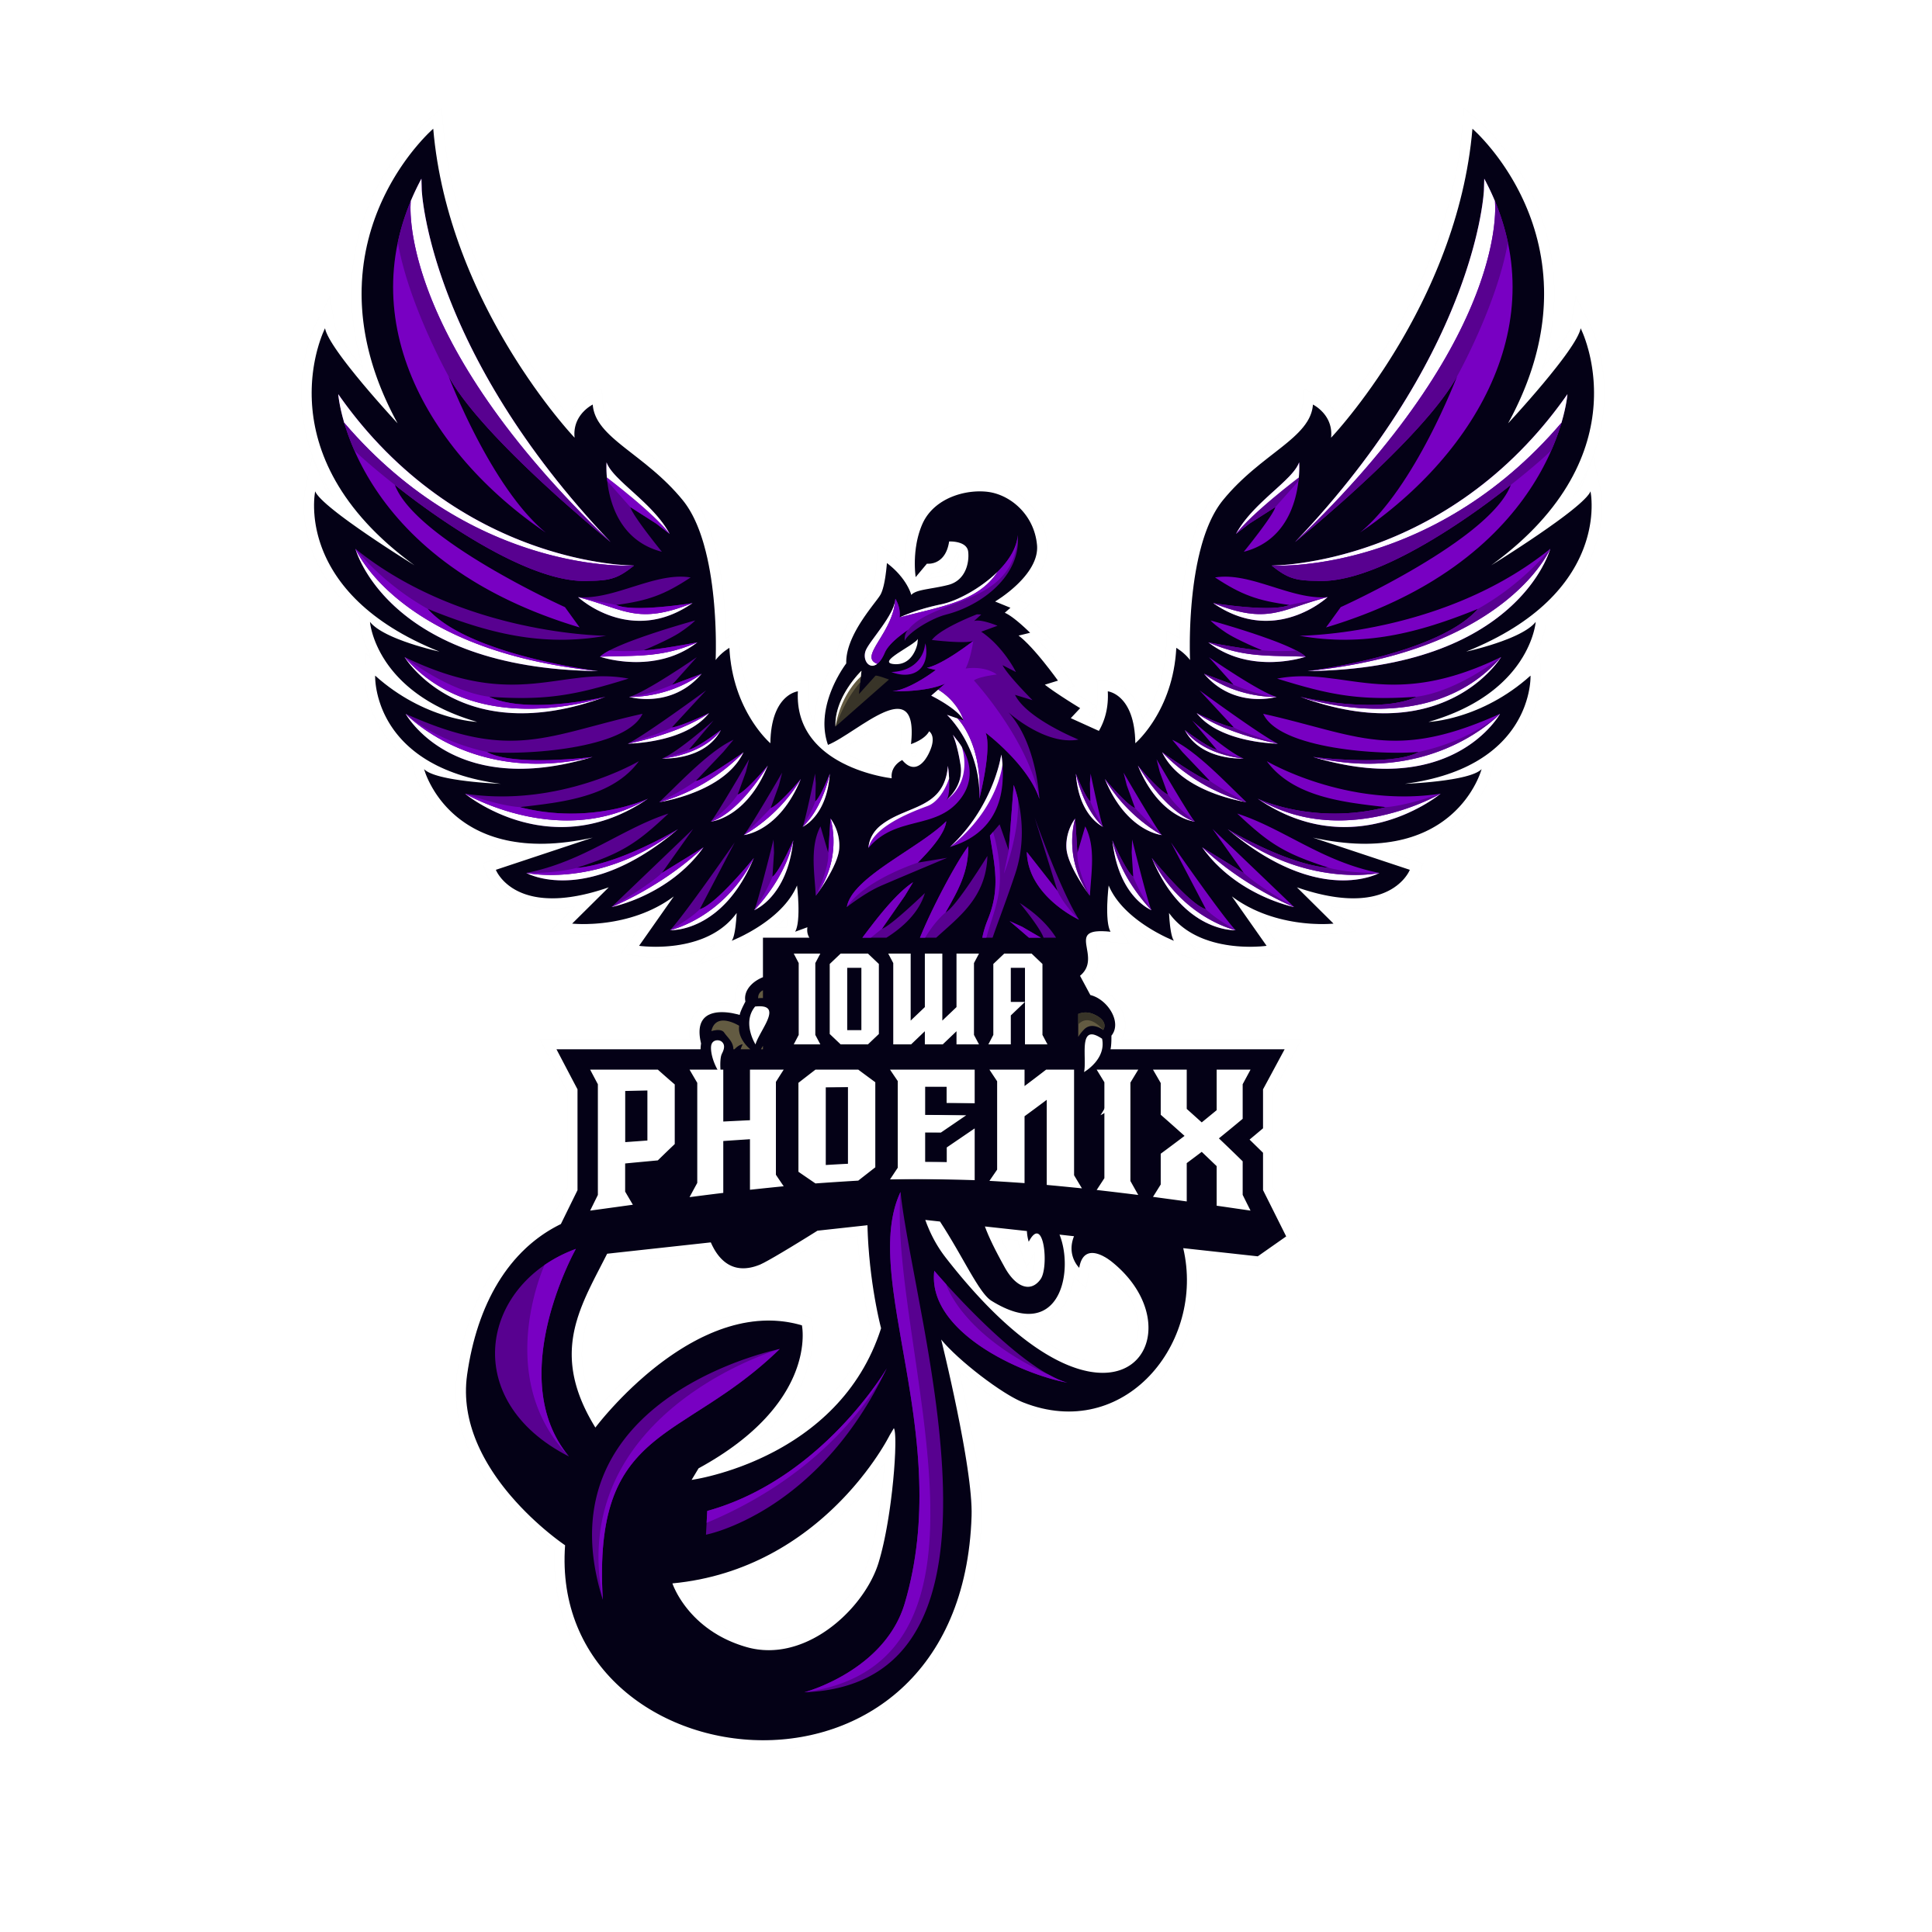 Iowa Phoenix